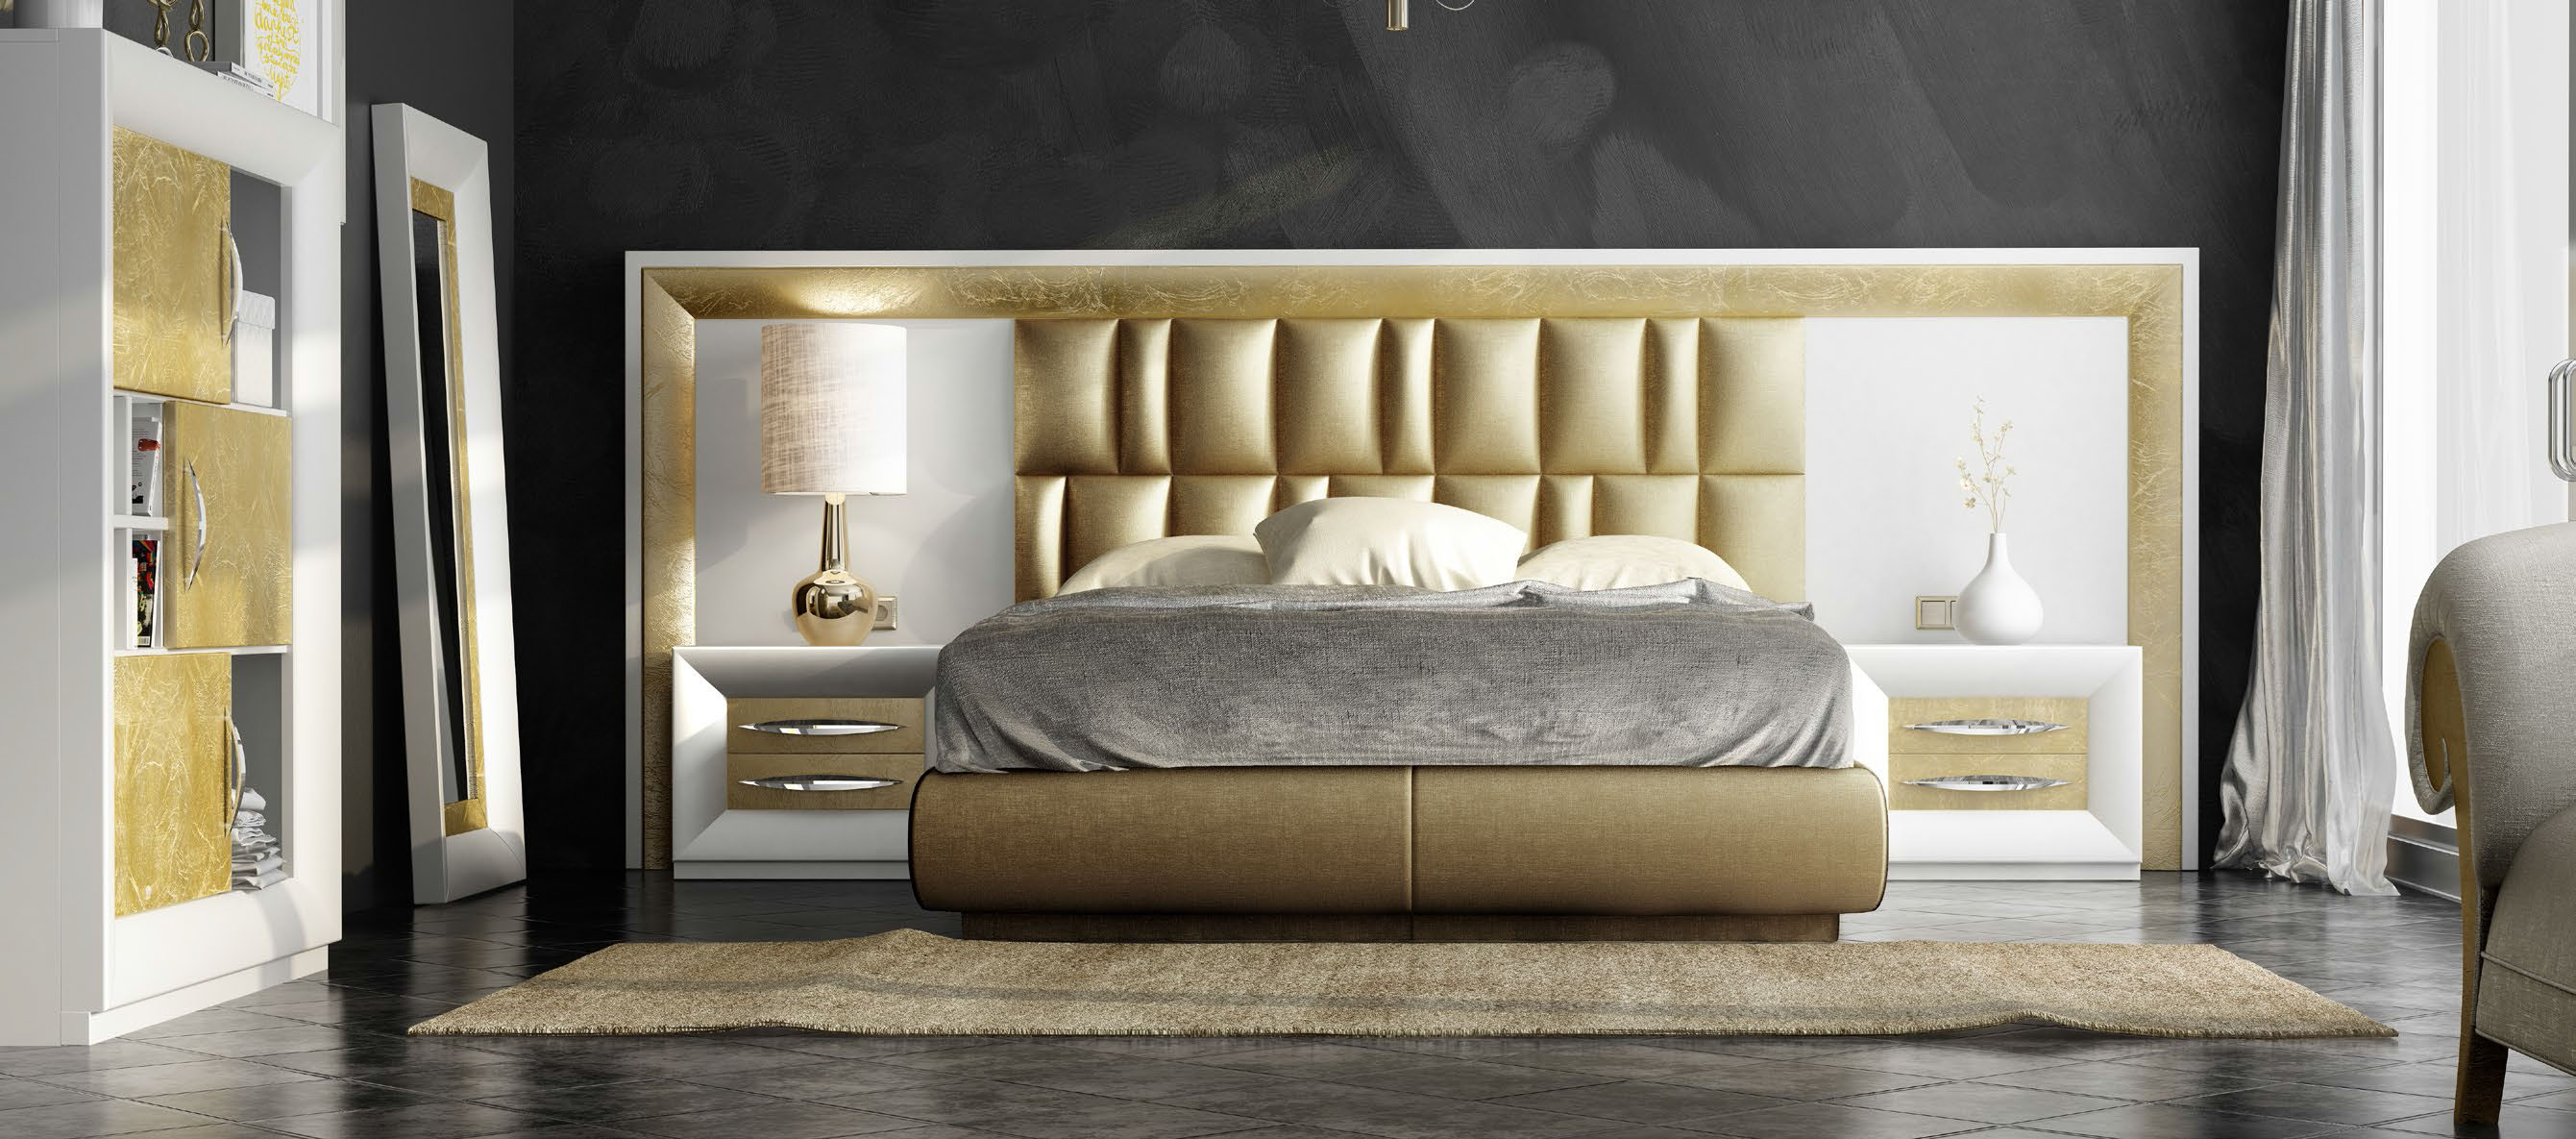 Brands Franco Furniture Bedrooms vol1, Spain DOR 136